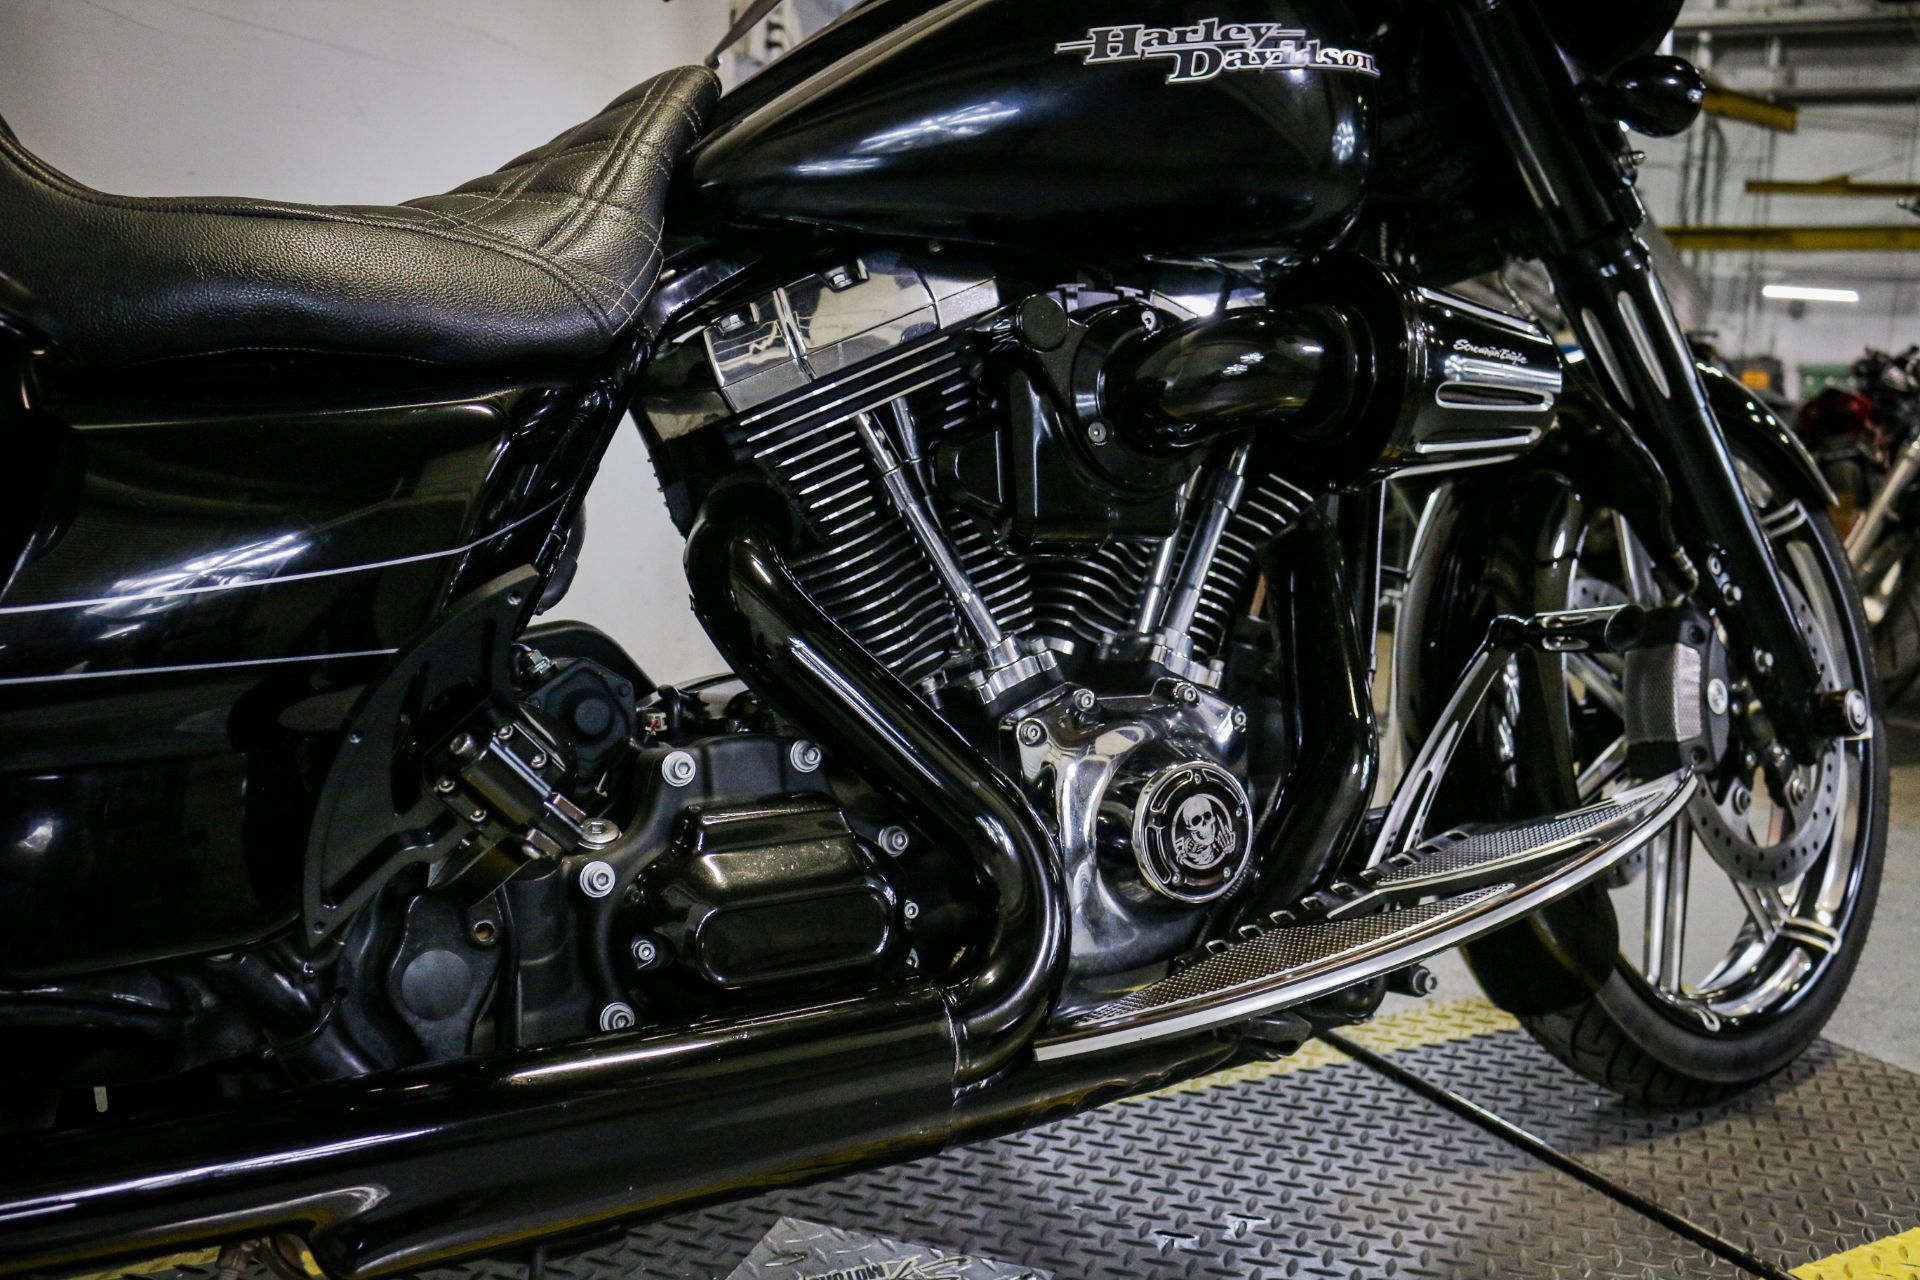 2014 Harley-Davidson Street Glide® Special in Sacramento, California - Photo 10